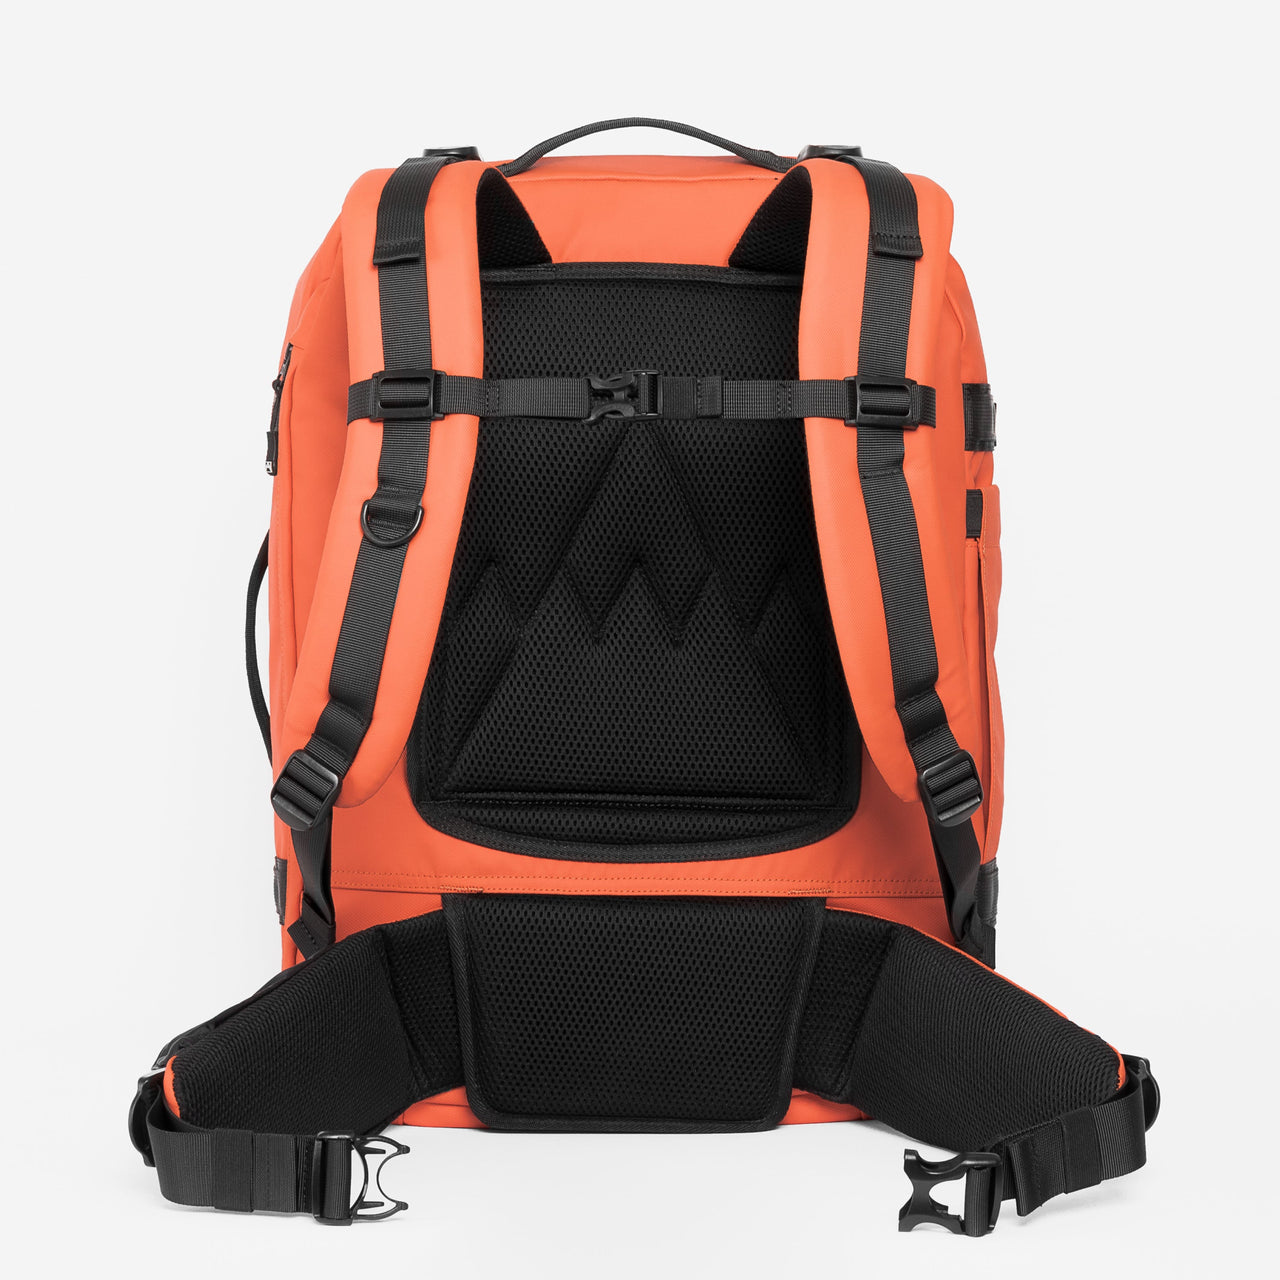 Adventure Bag in Ember Orange back view